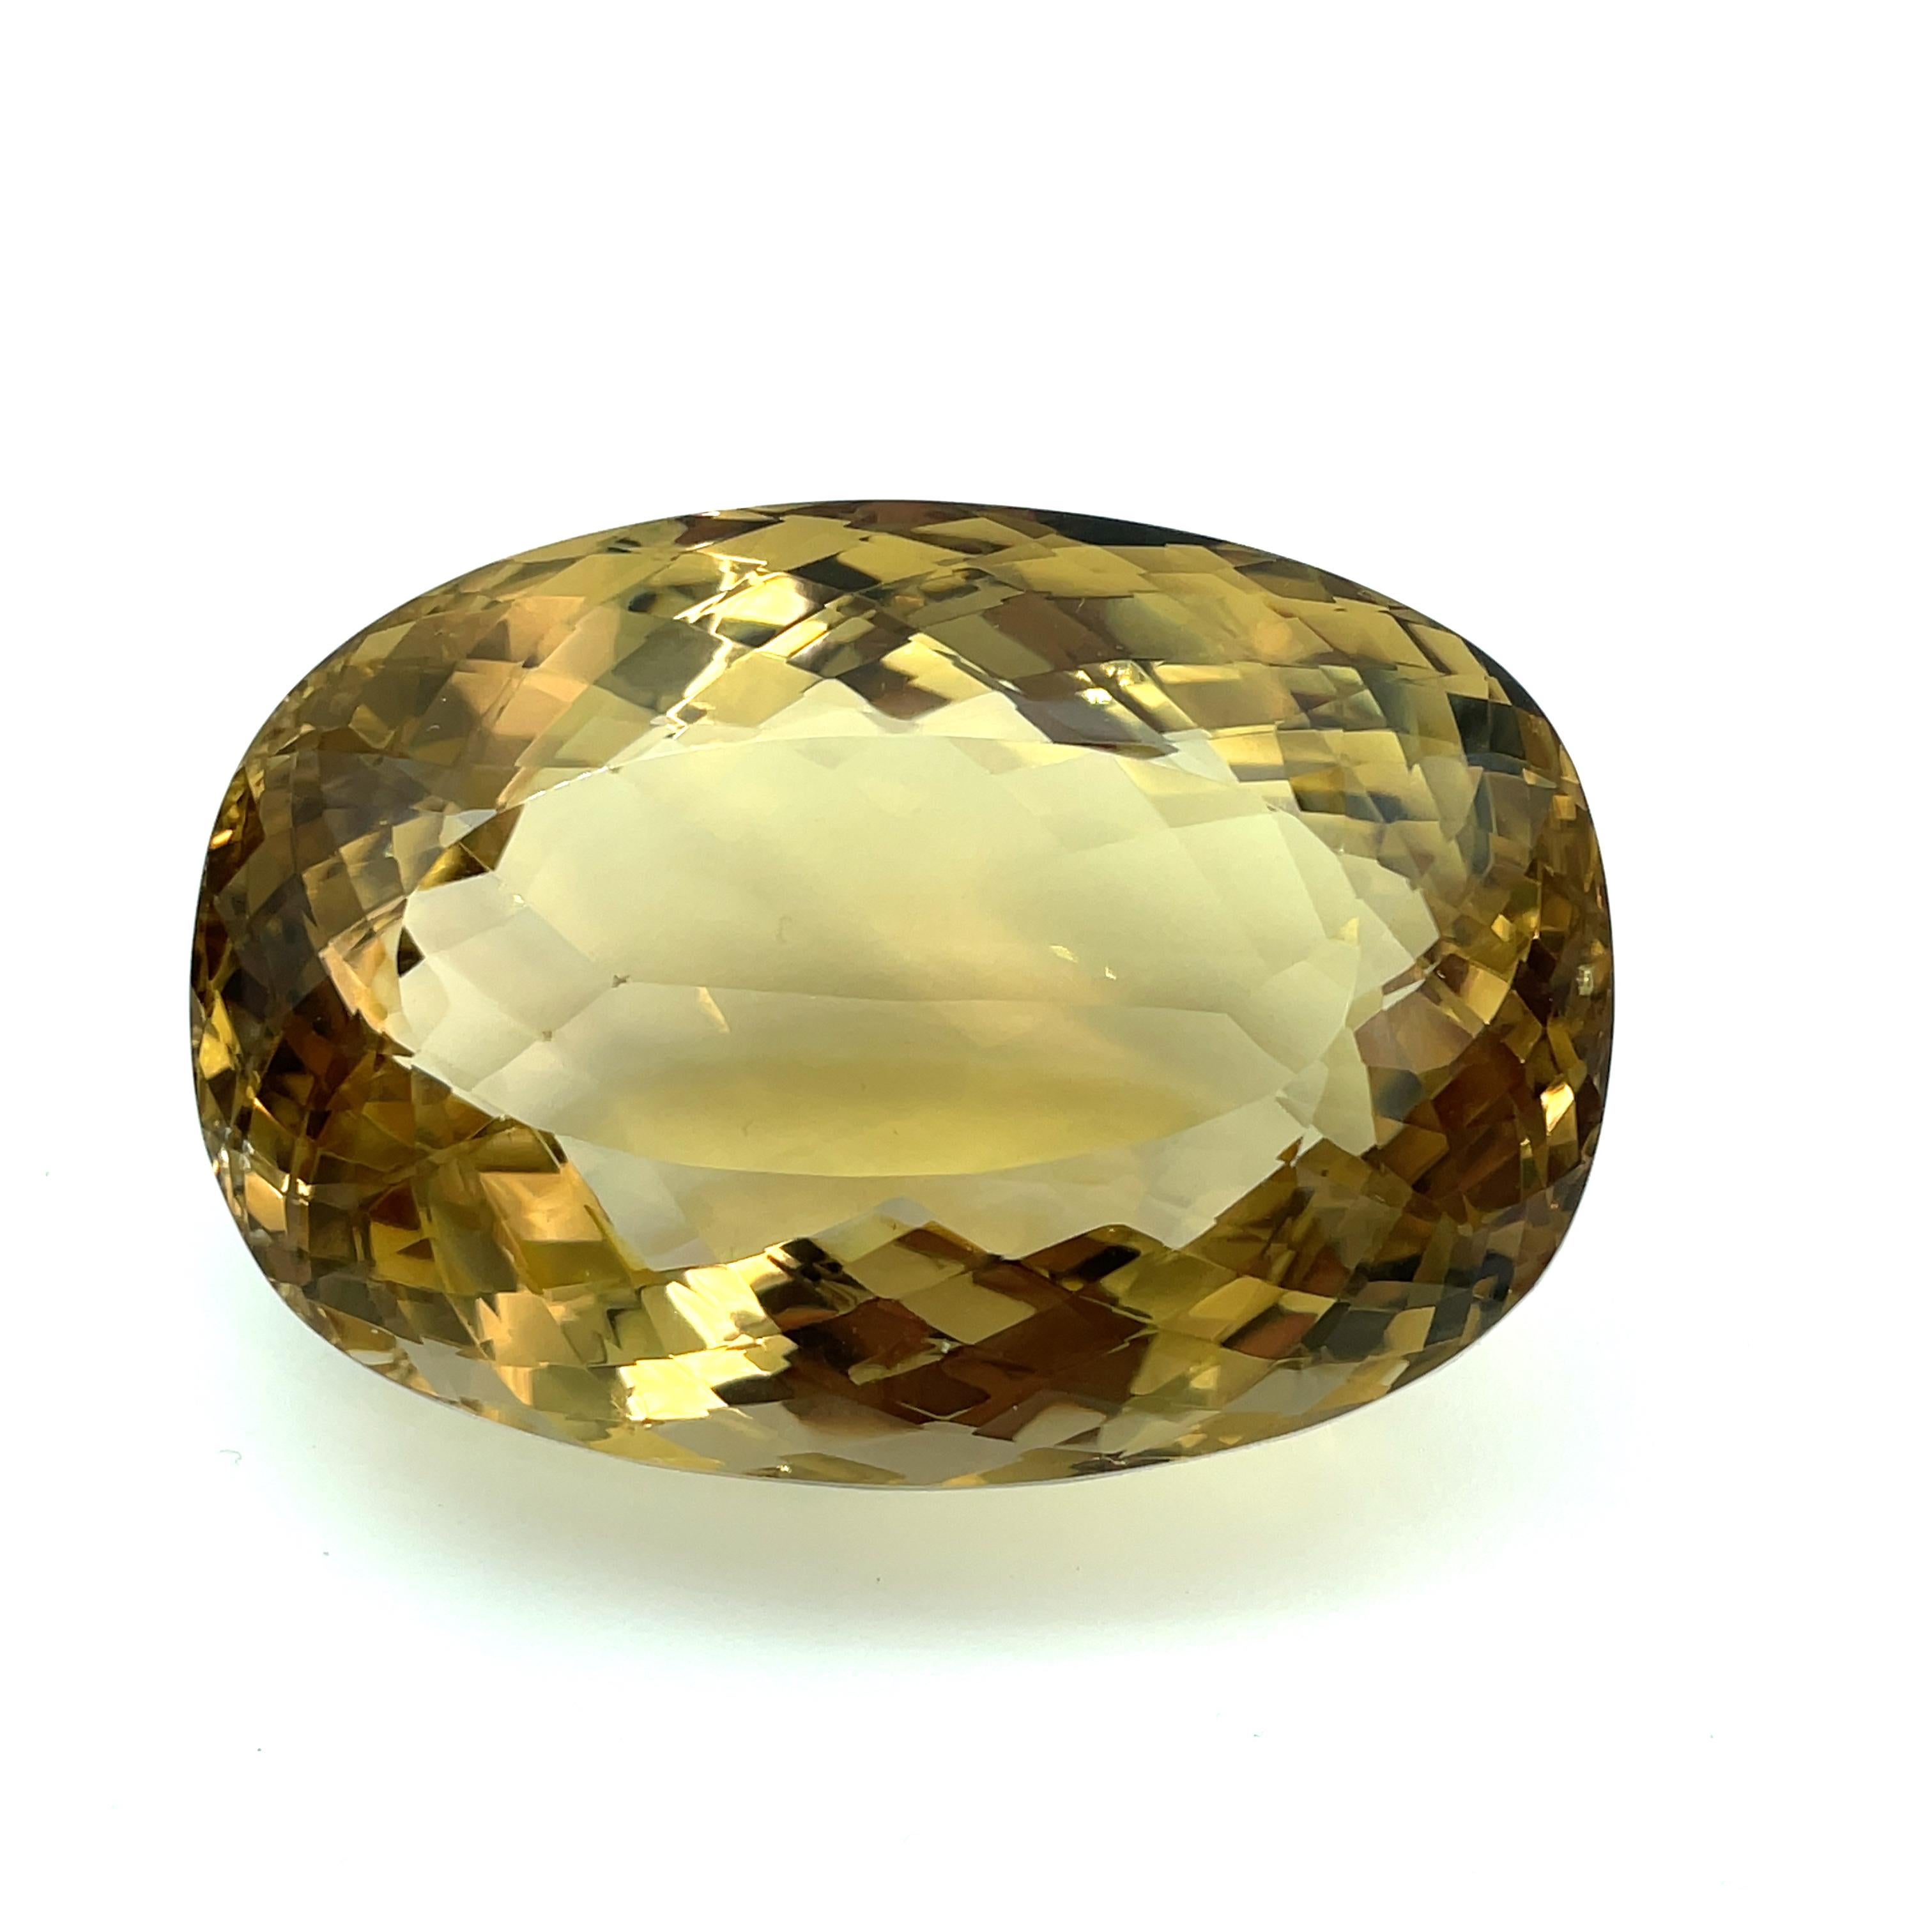 1058 Carat Oval Faceted Smoky Quartz Collector Gemstone (pierre précieuse de collection)   en vente 4